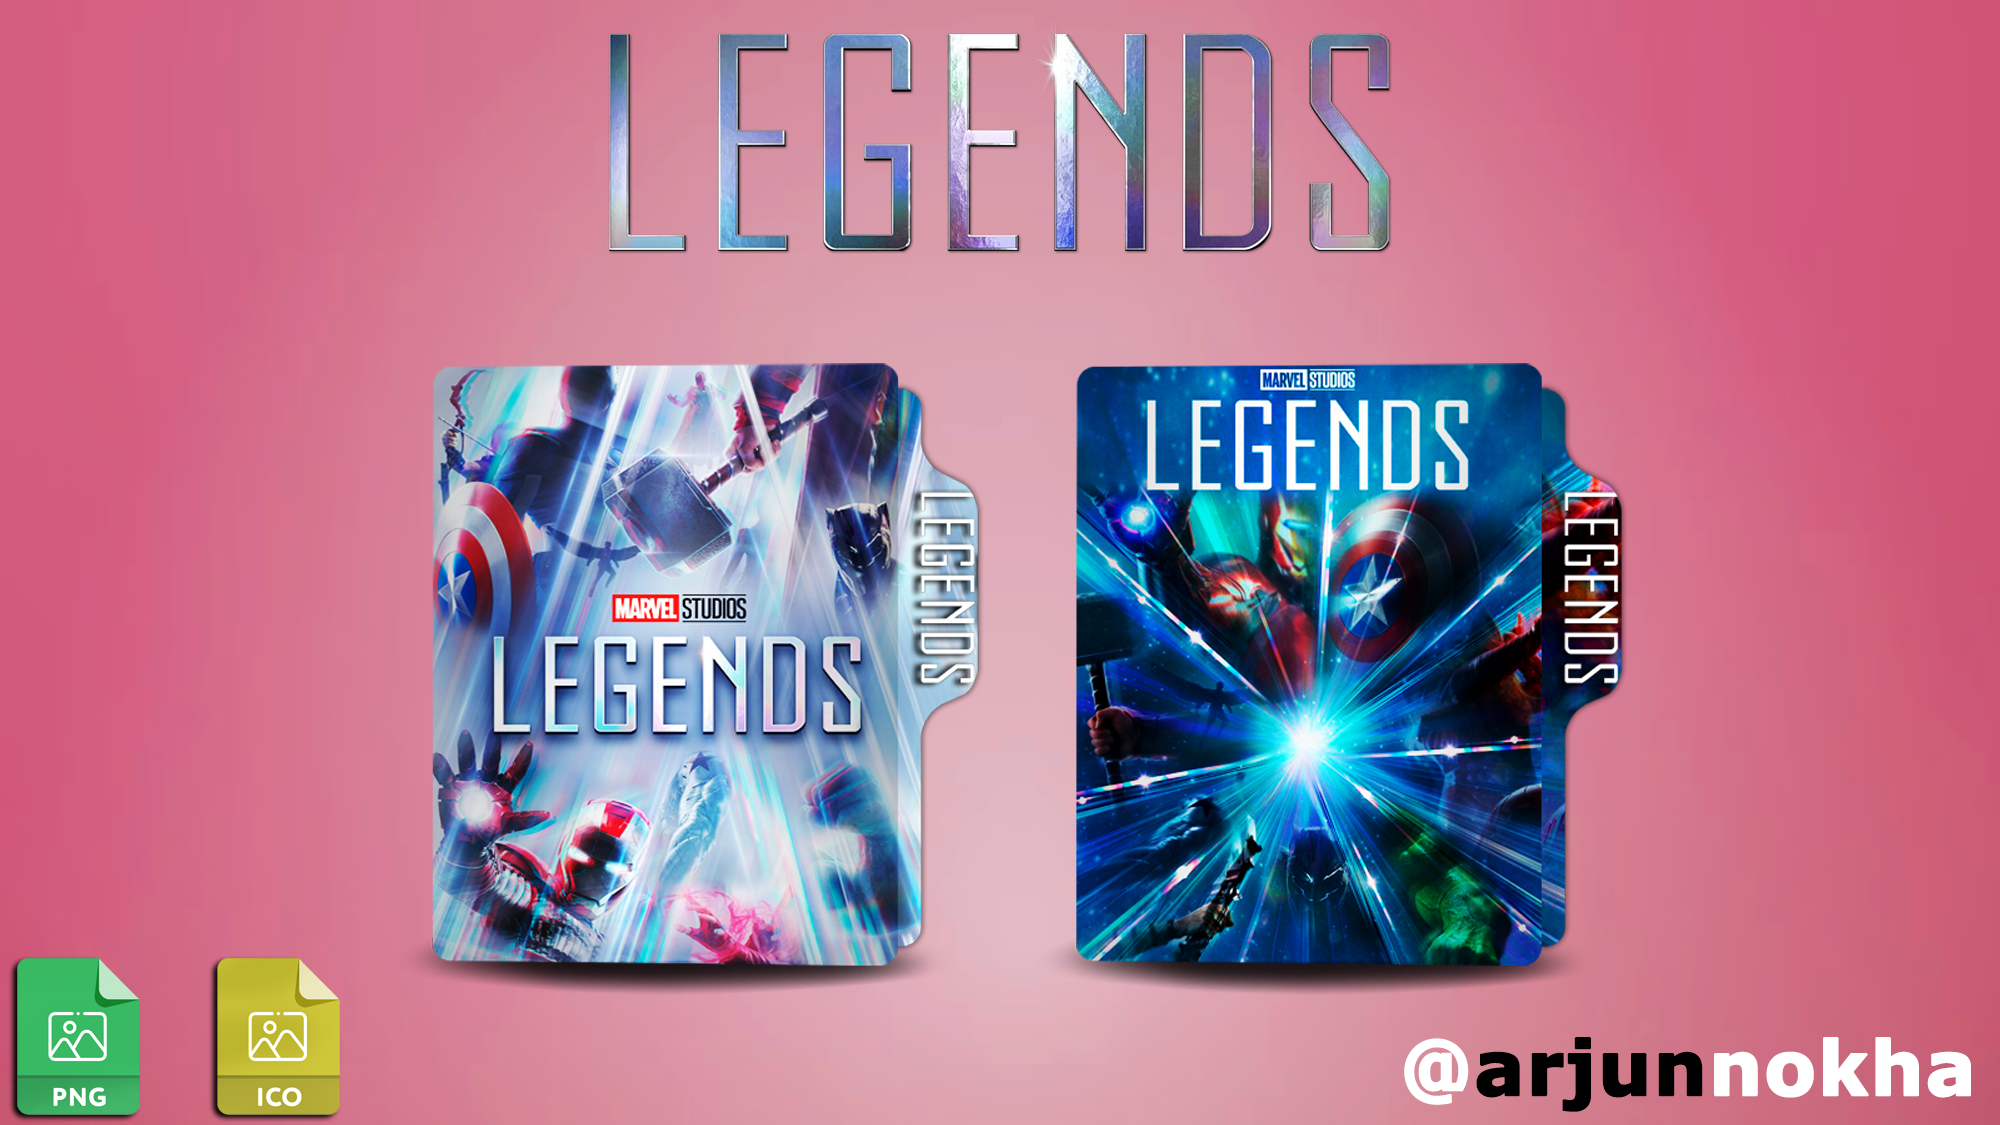 Marvel Studios Legends Logo Wallpapers